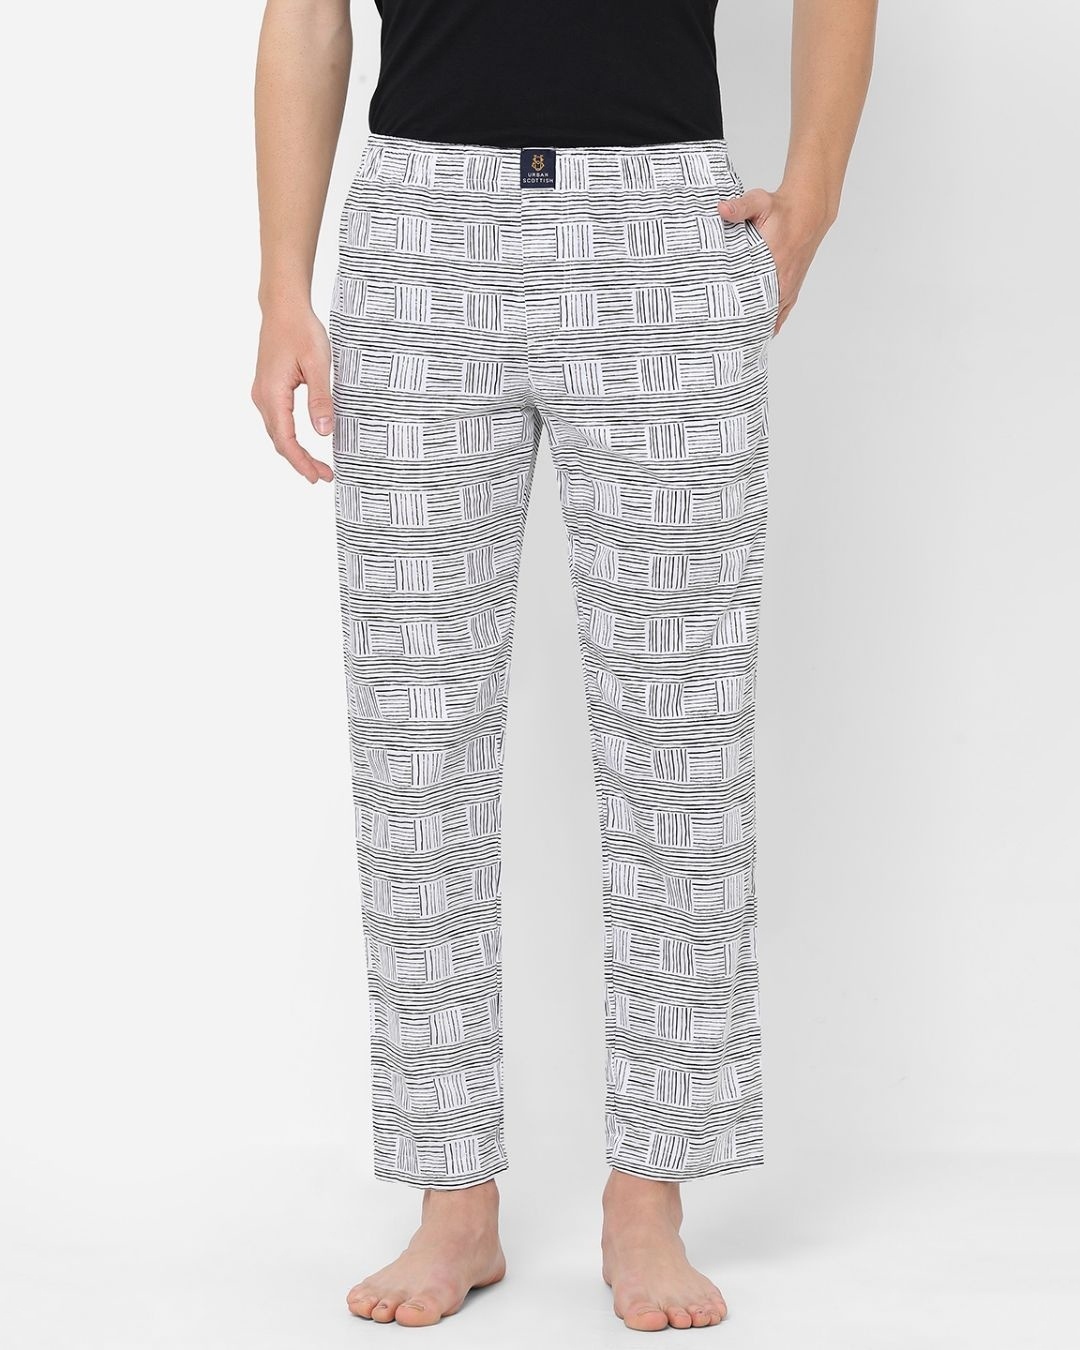 Polo Ralph Lauren Mens LARGE Cotton Navy Lounge Pajama Pants Horse & Jockey  | eBay